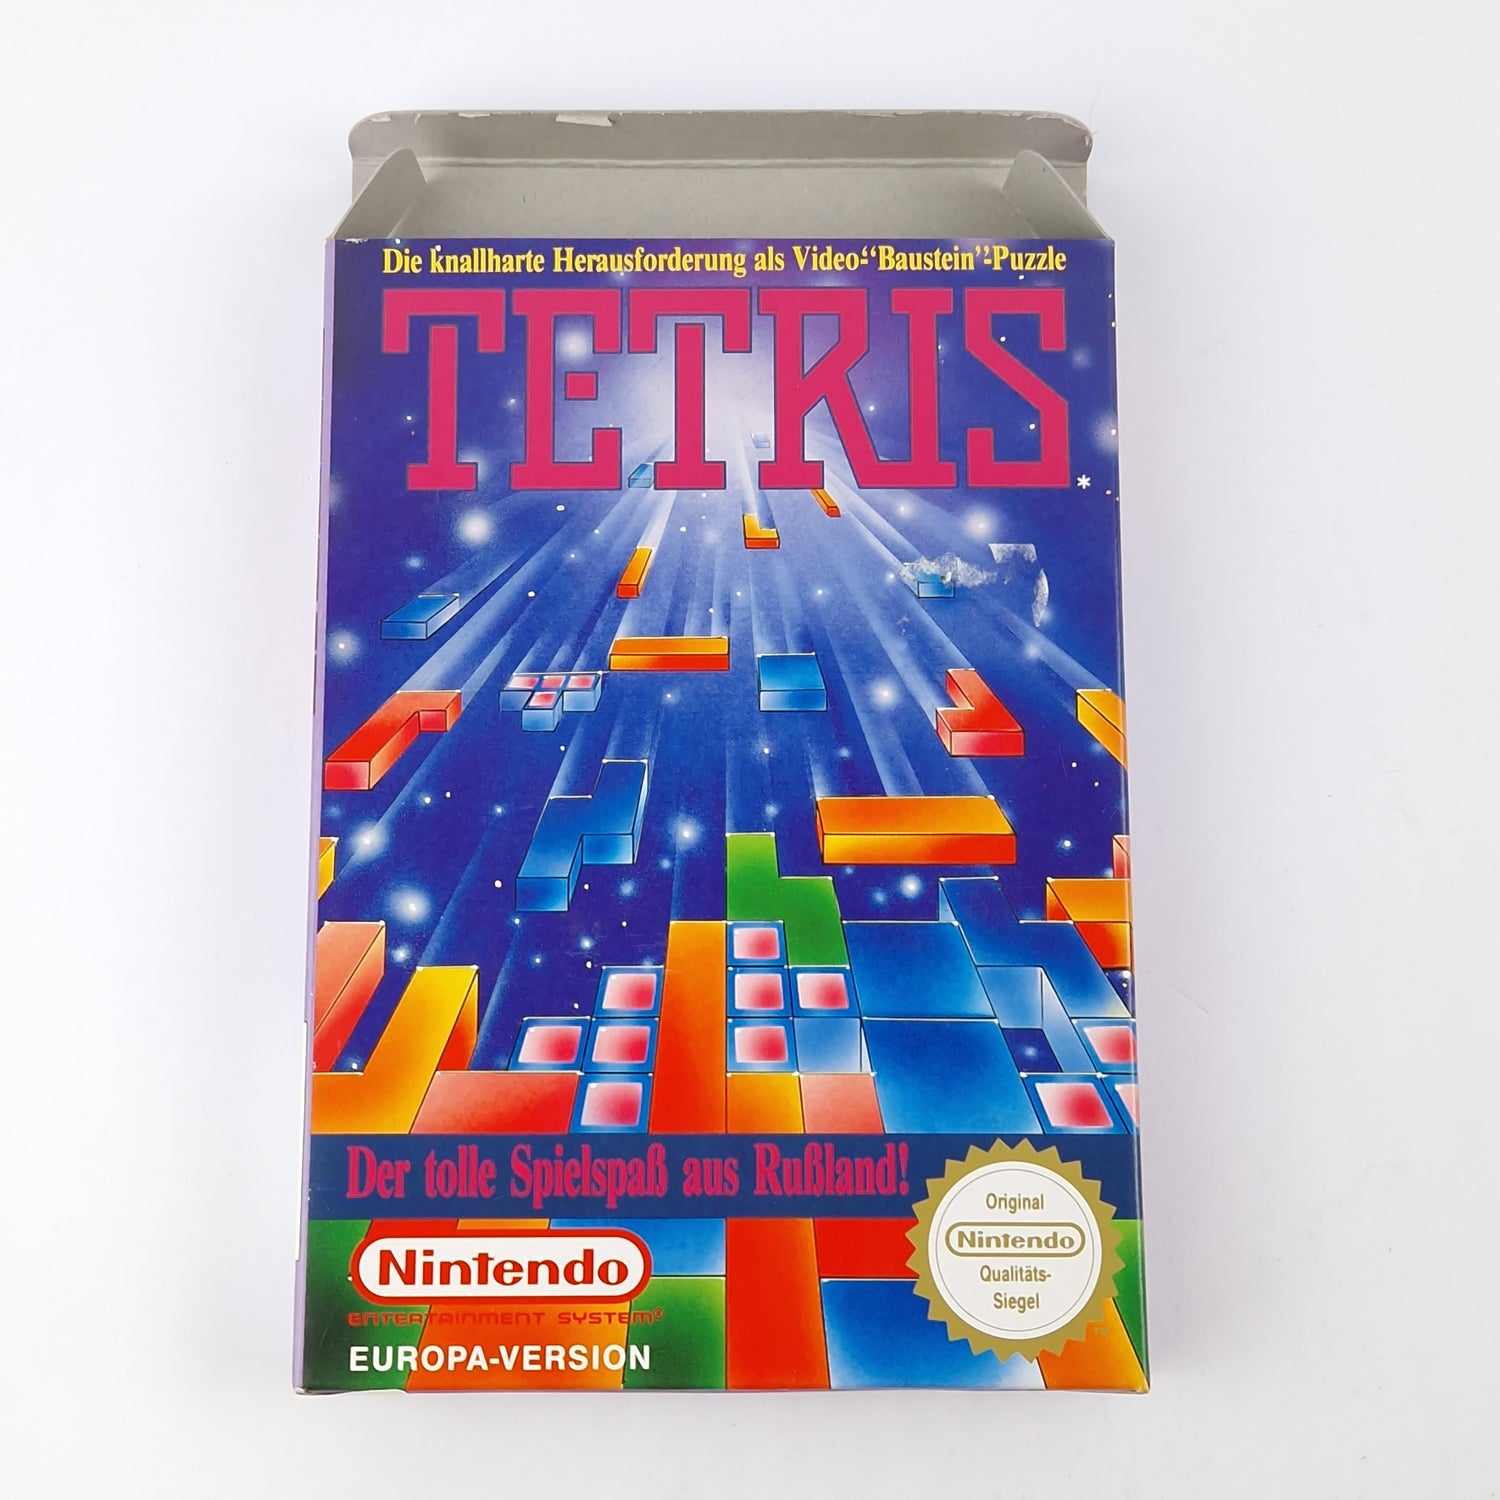 Nintendo NES Game: Tetris - Module Cartridge Instructions OVP cib PAL